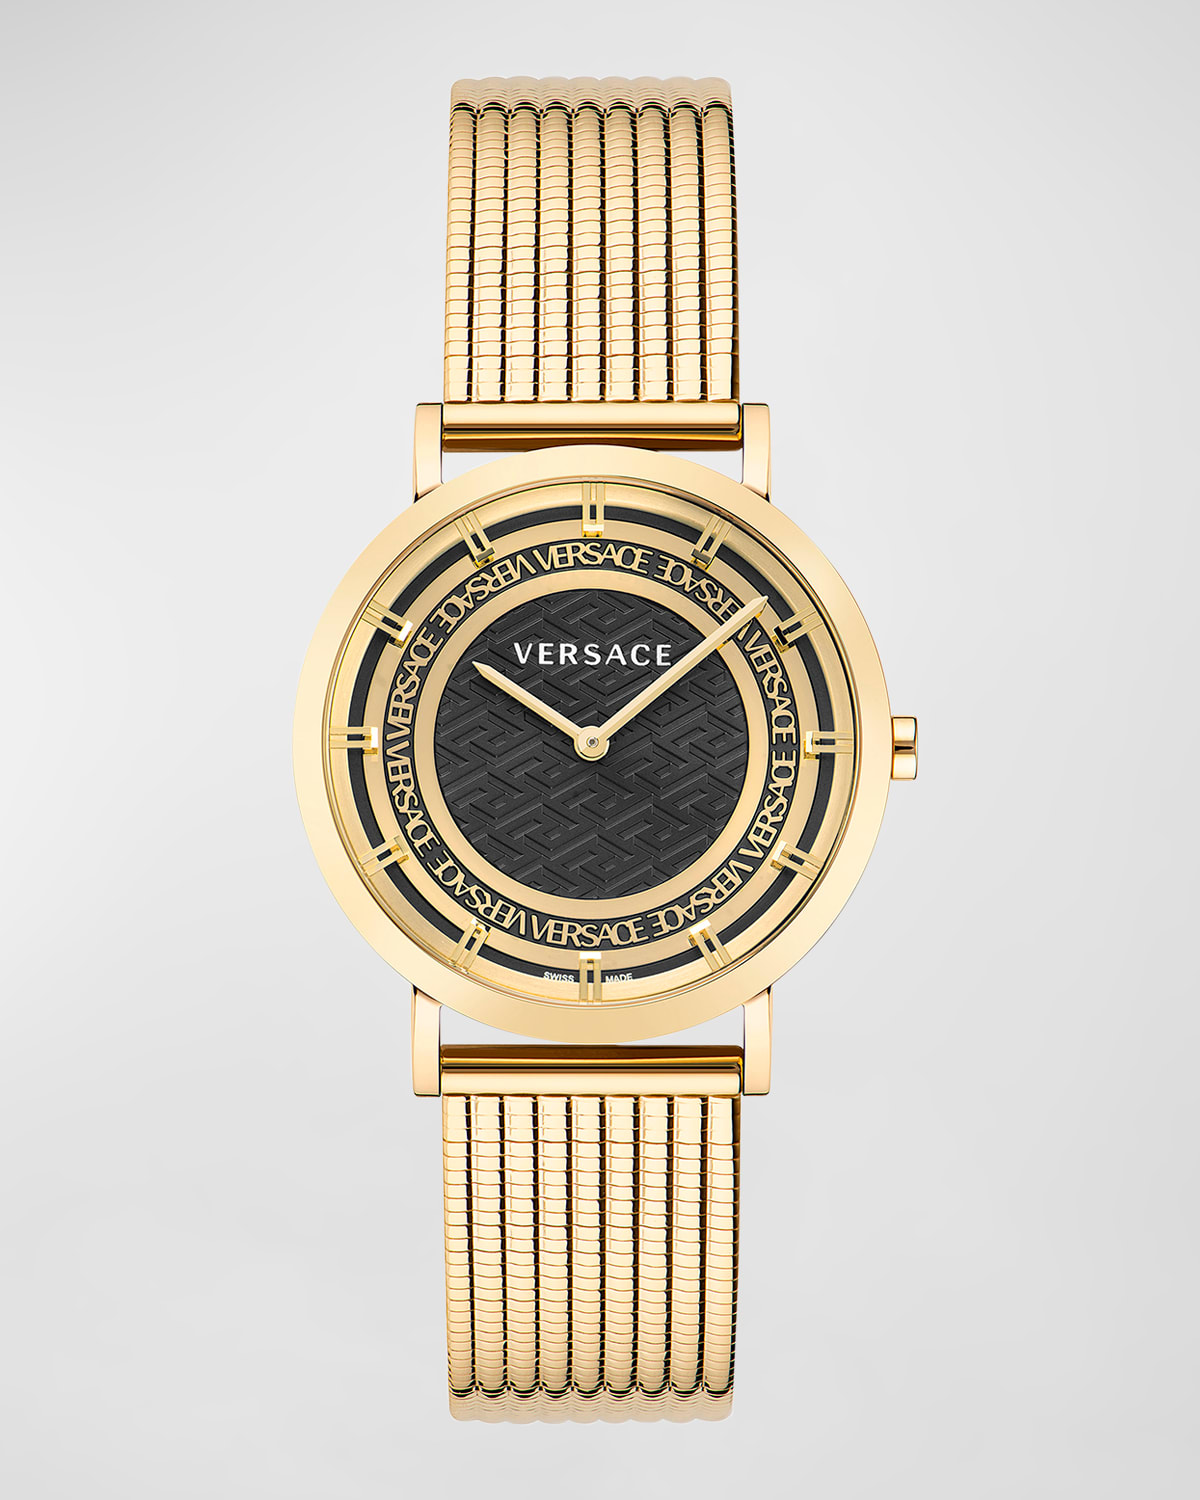 Versace New Generation Watch with Bracelet Strap, Gold/Black